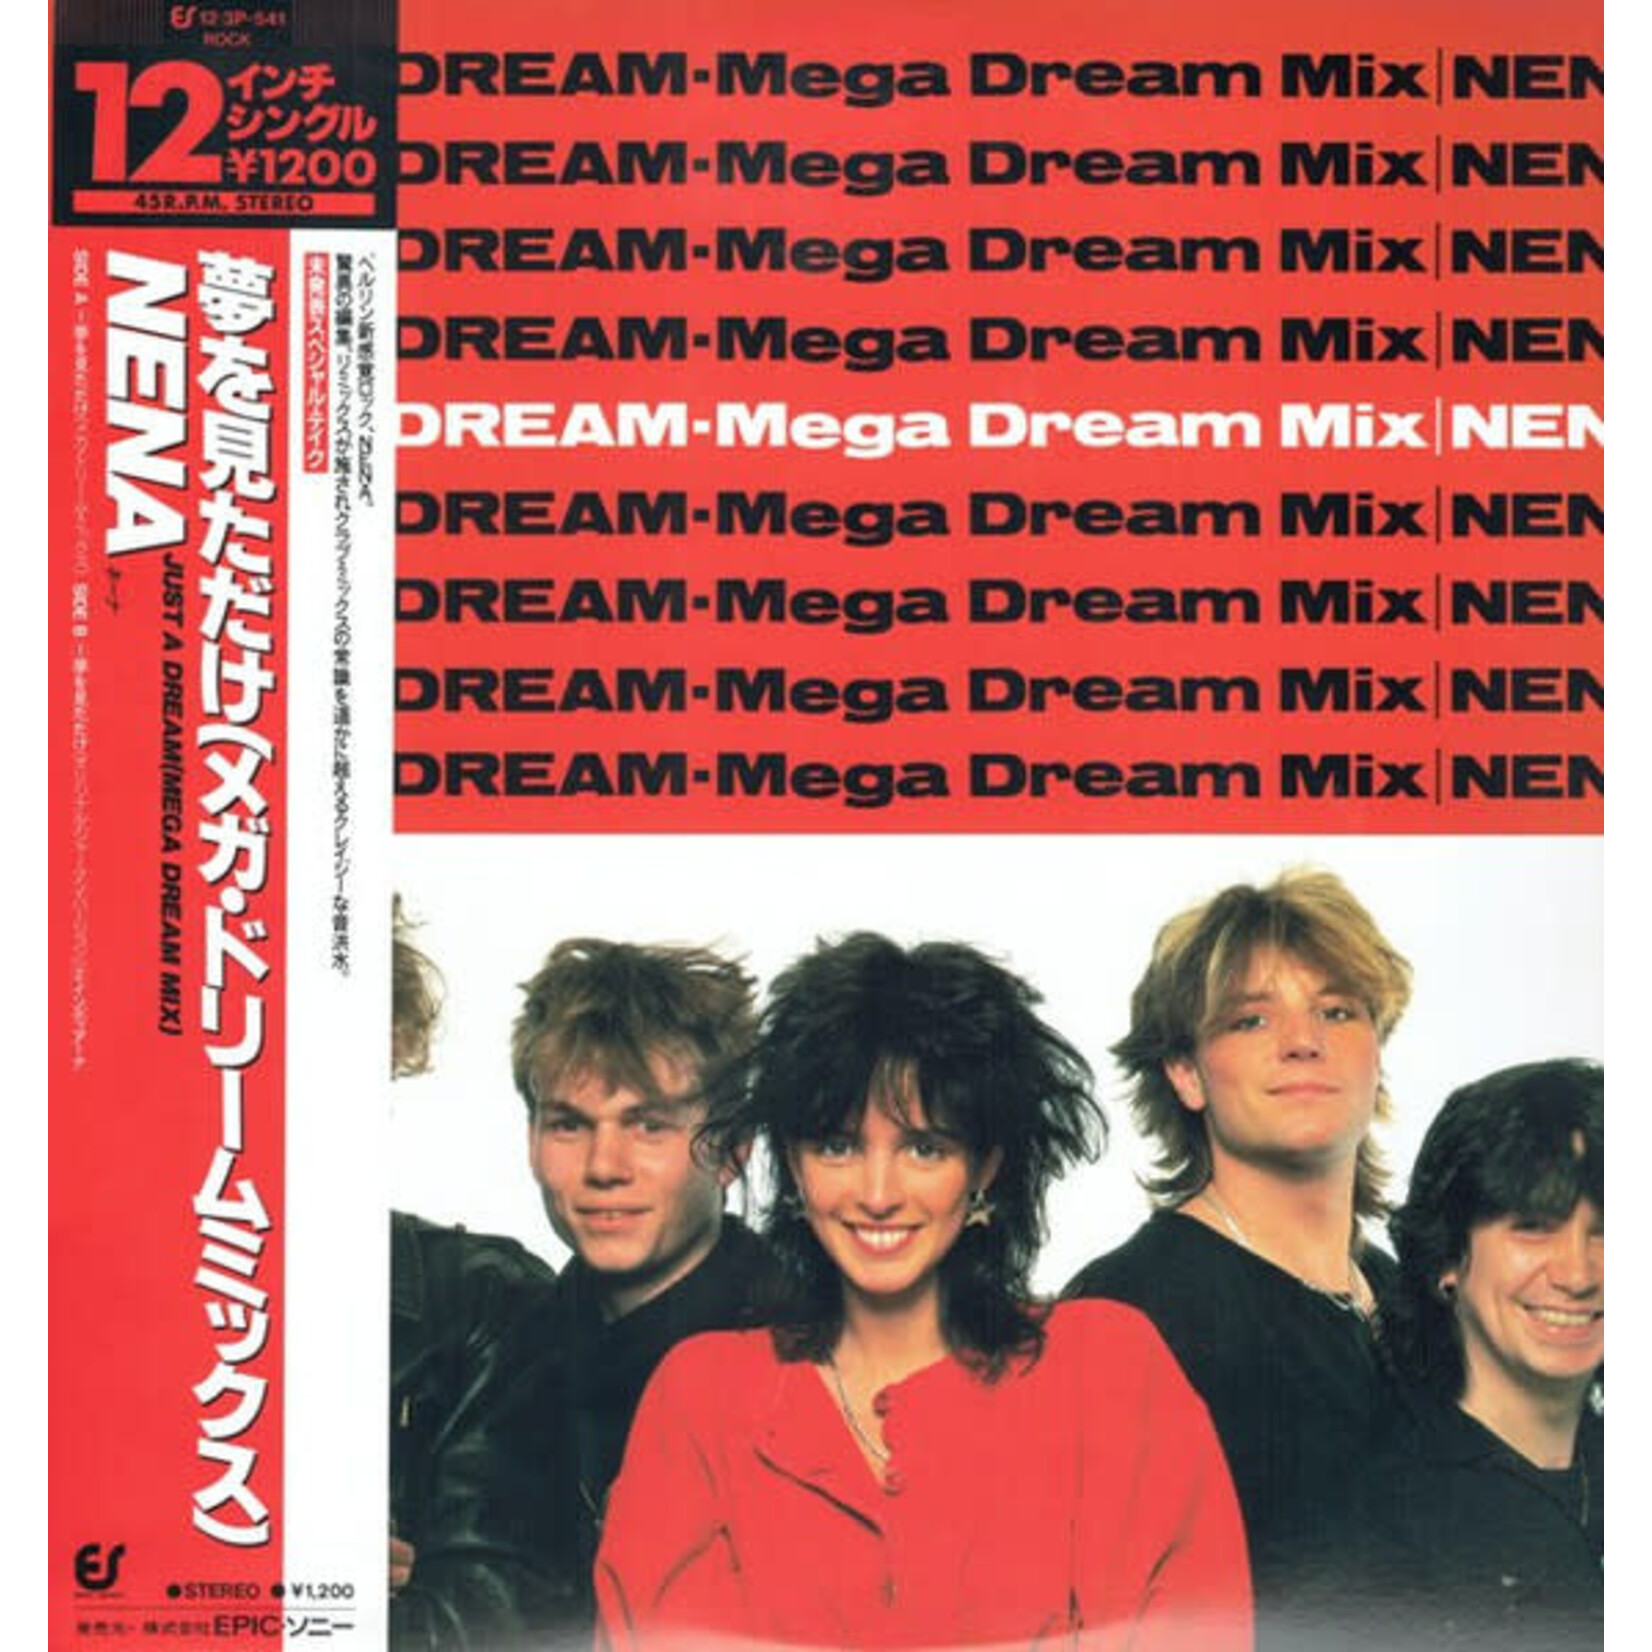 [Vintage] Nena: Just a Dream W/OBI (mega dream mix) [JAPANESE]